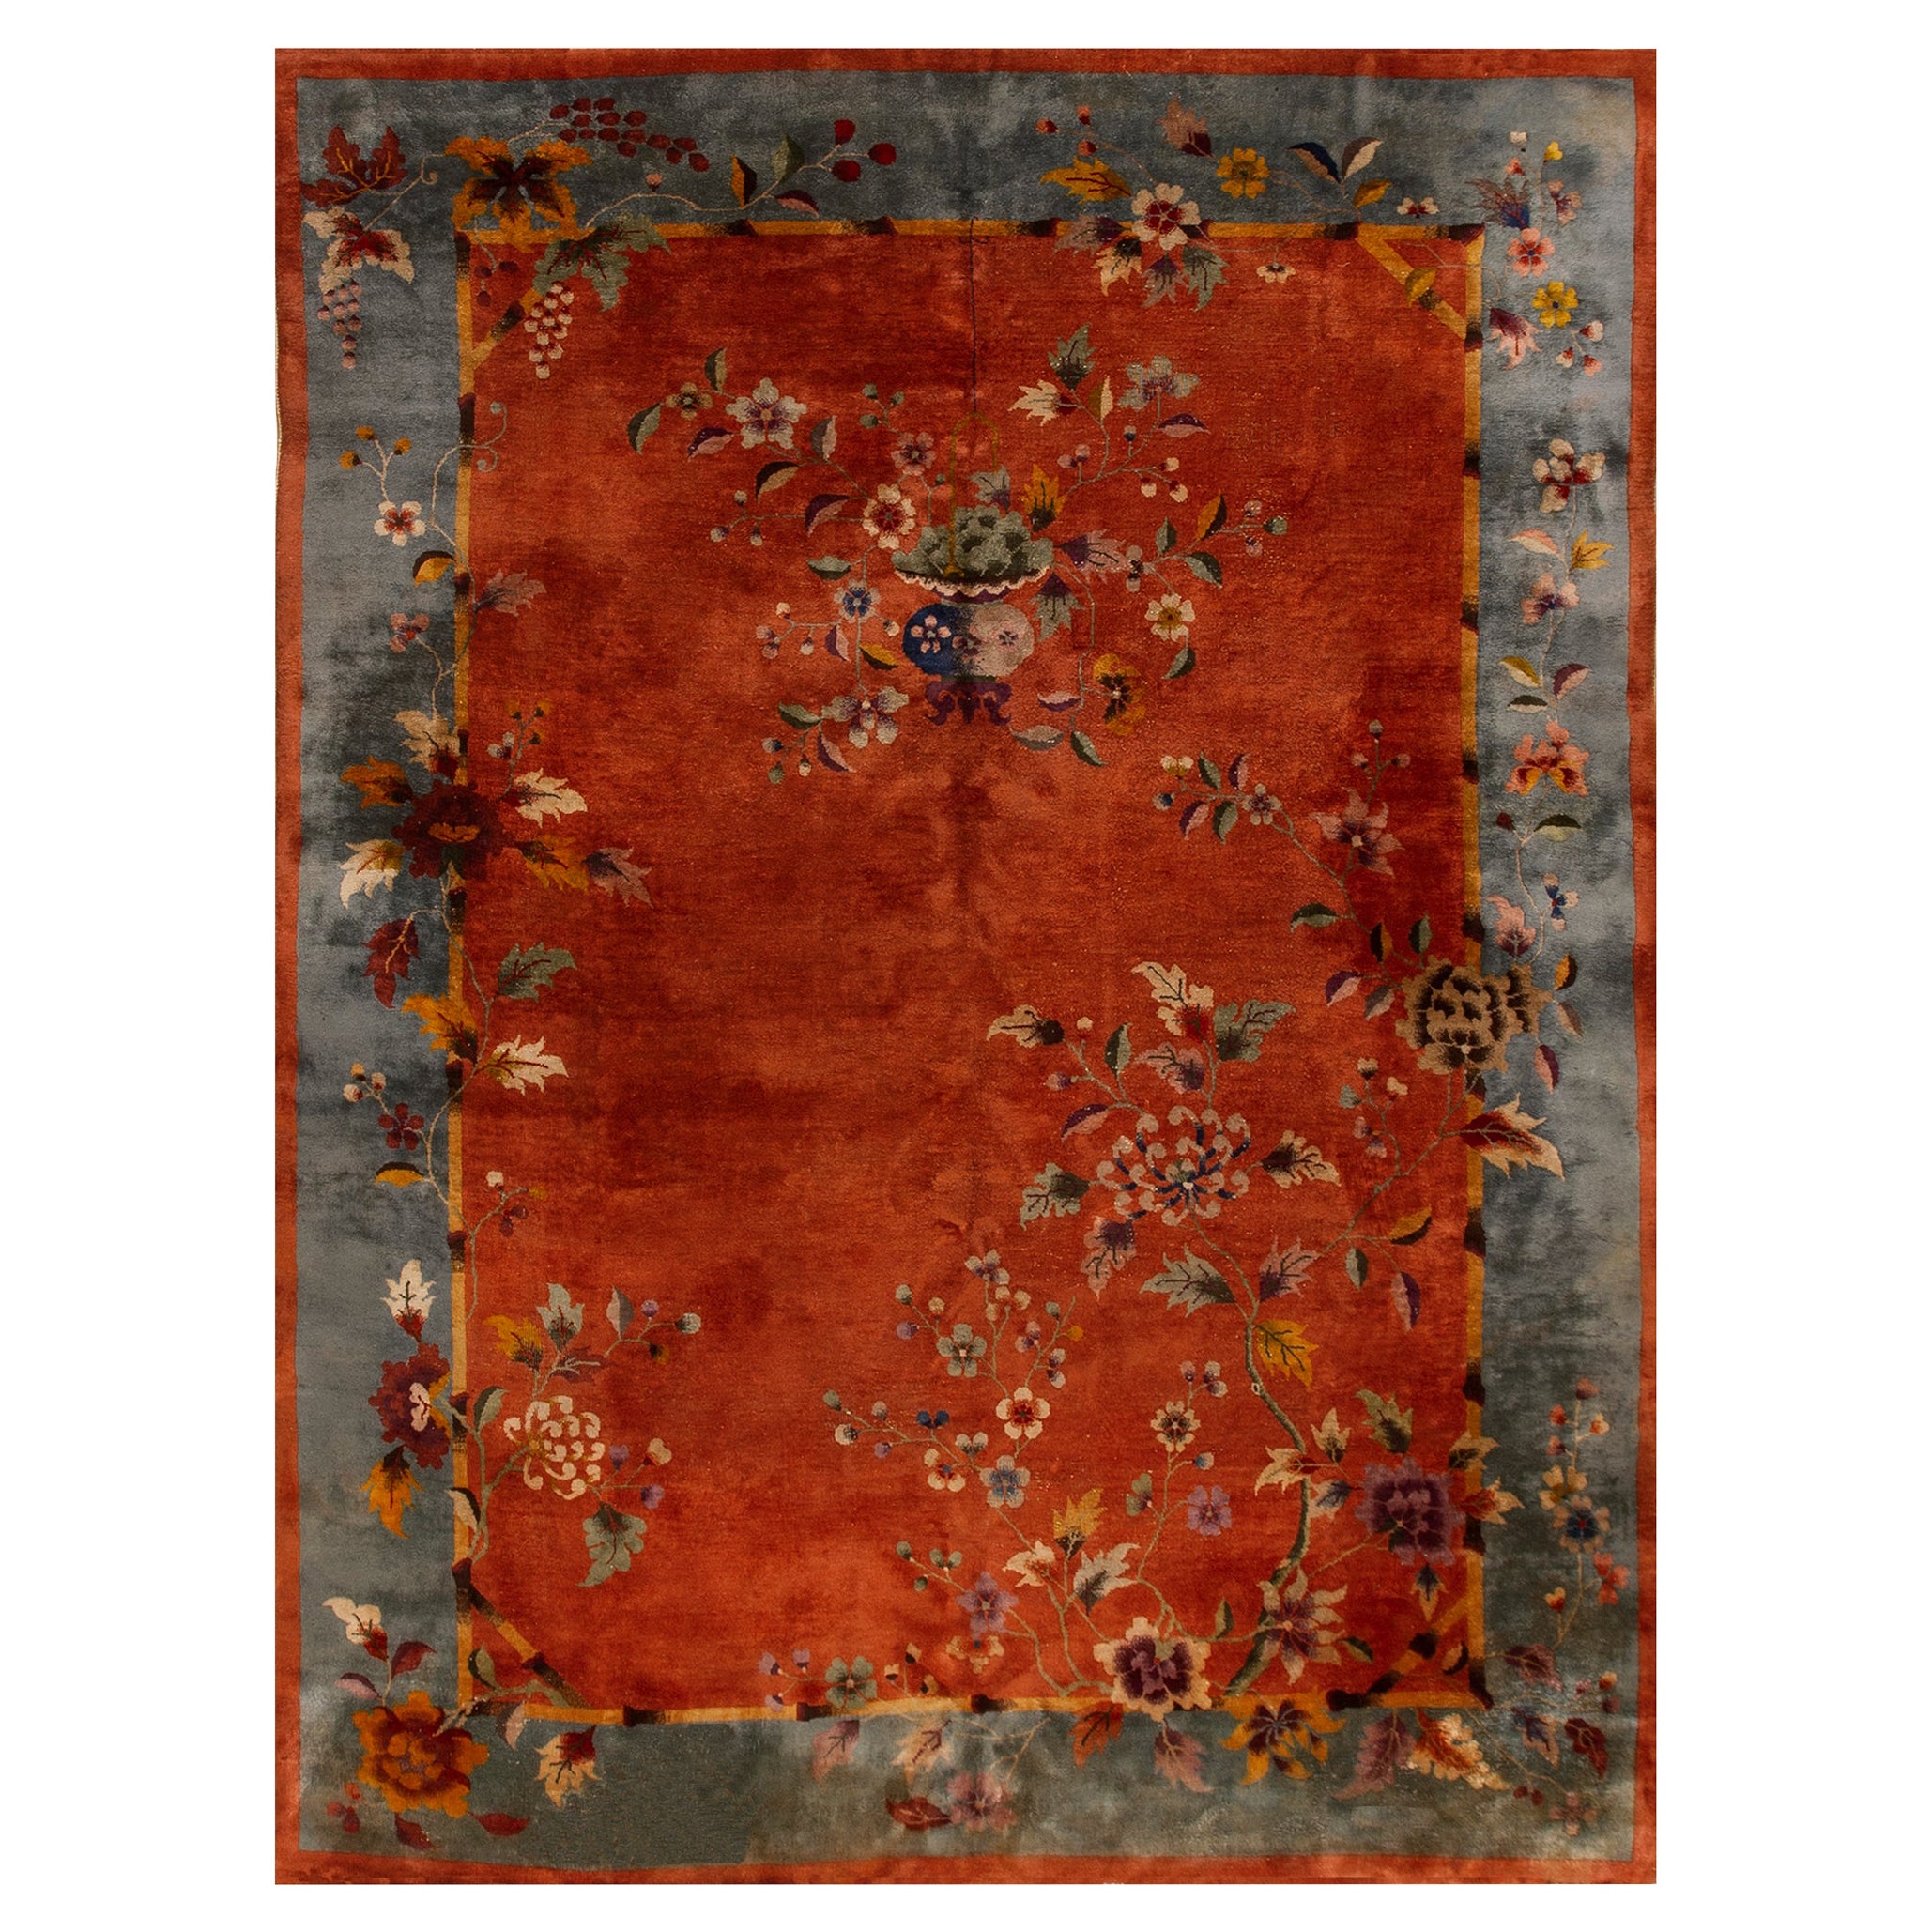 1920s Chinese Art Deco Carpet ( 8' 9" x 11' 3" - 266 x 342 cm)